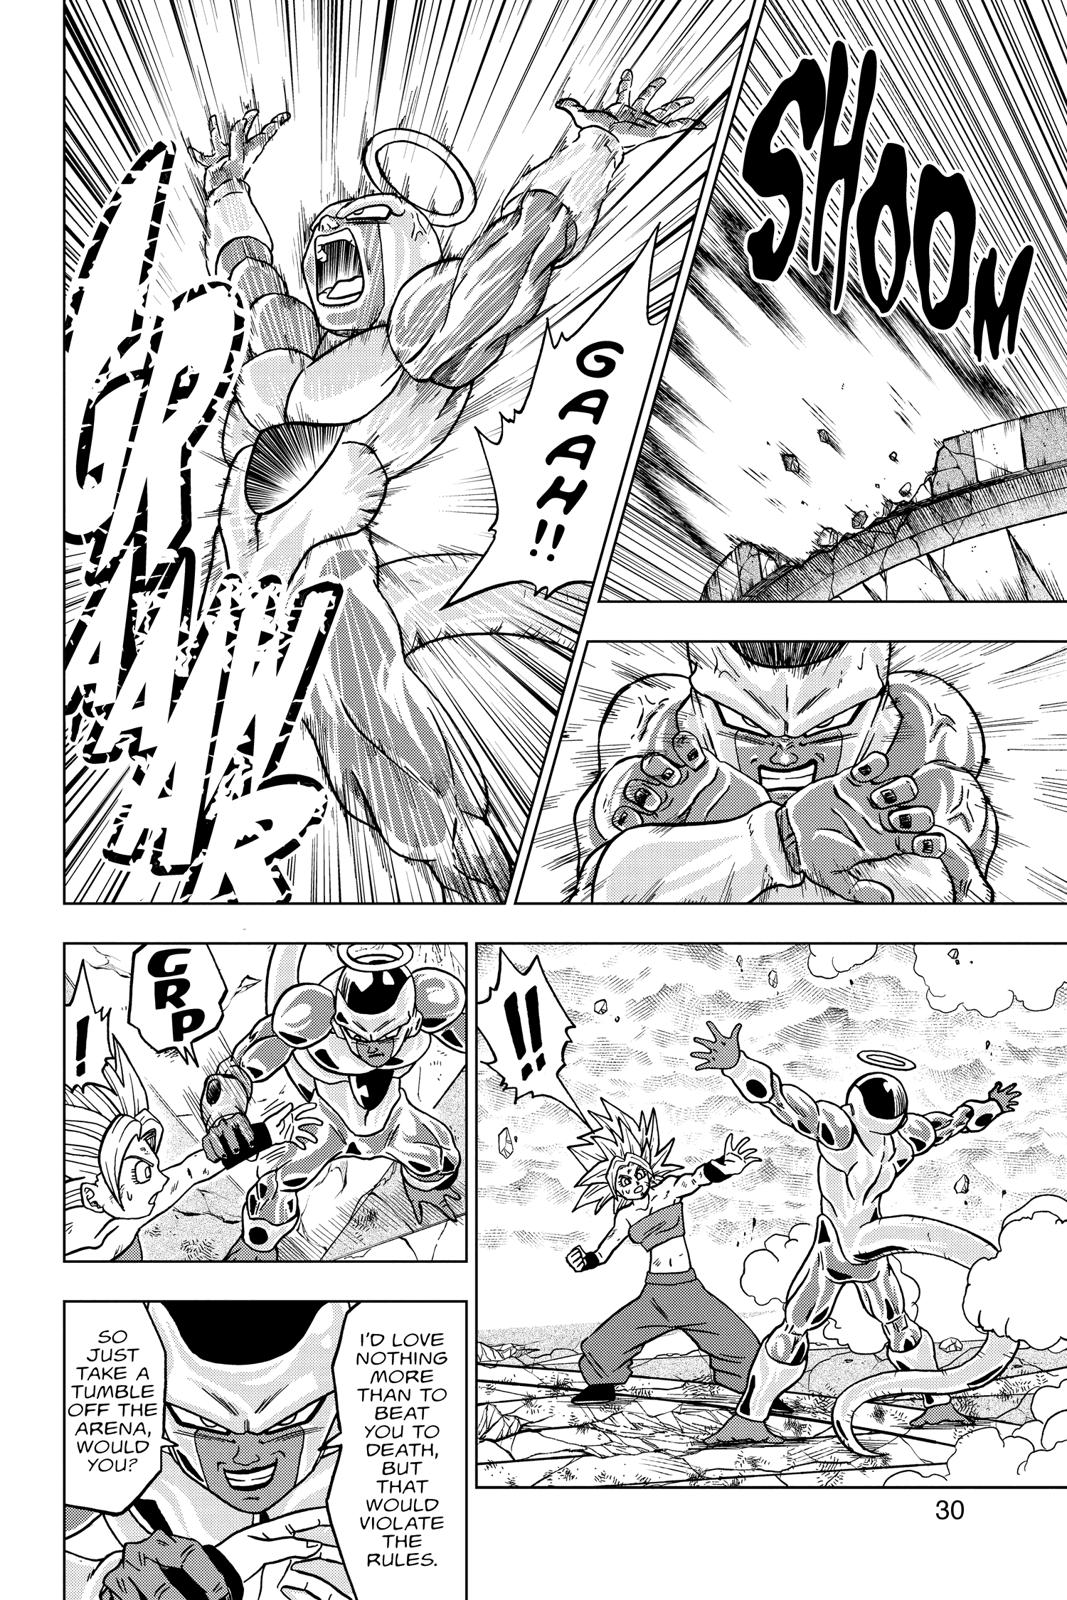  Dragon Ball Super, Chapter 37 image 30